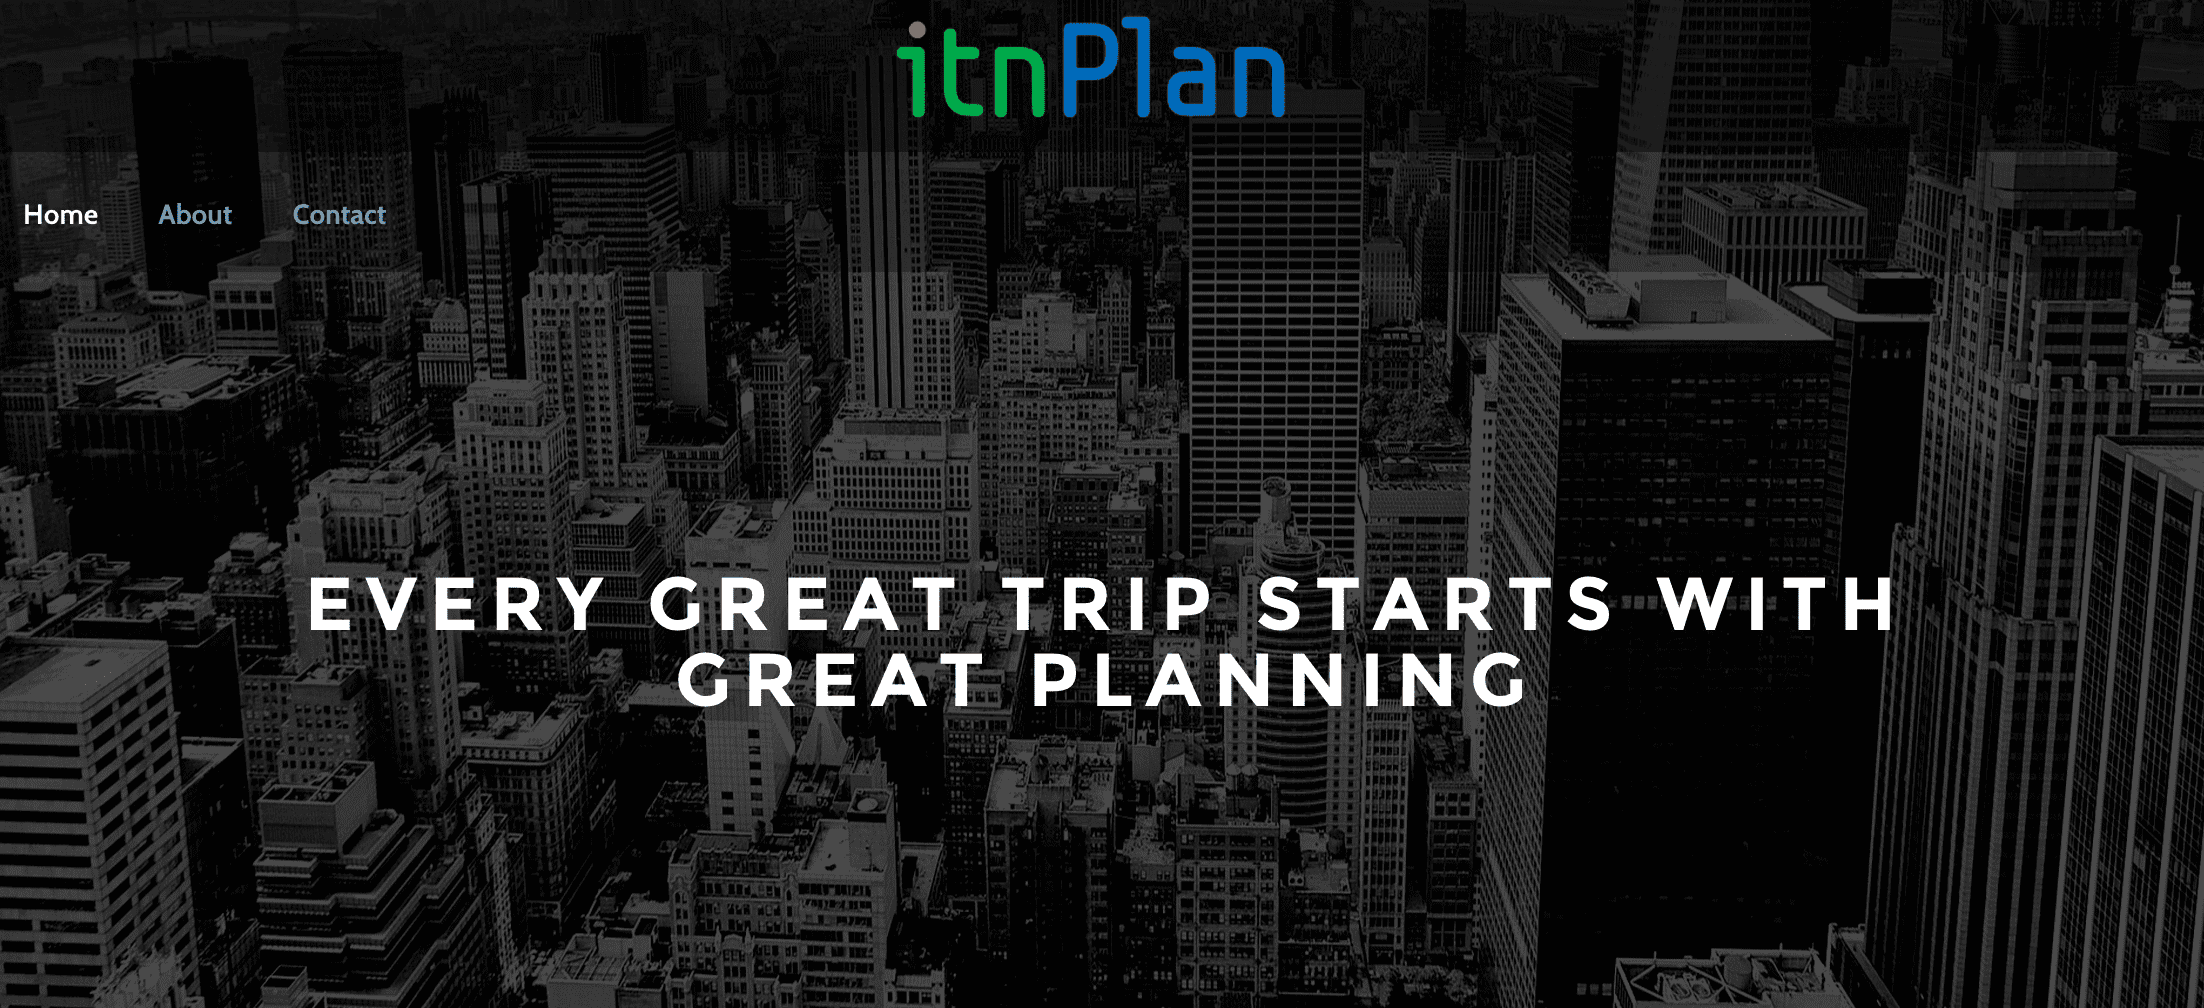 ItnPlan is a cloud-based trip planning platform for travelers.